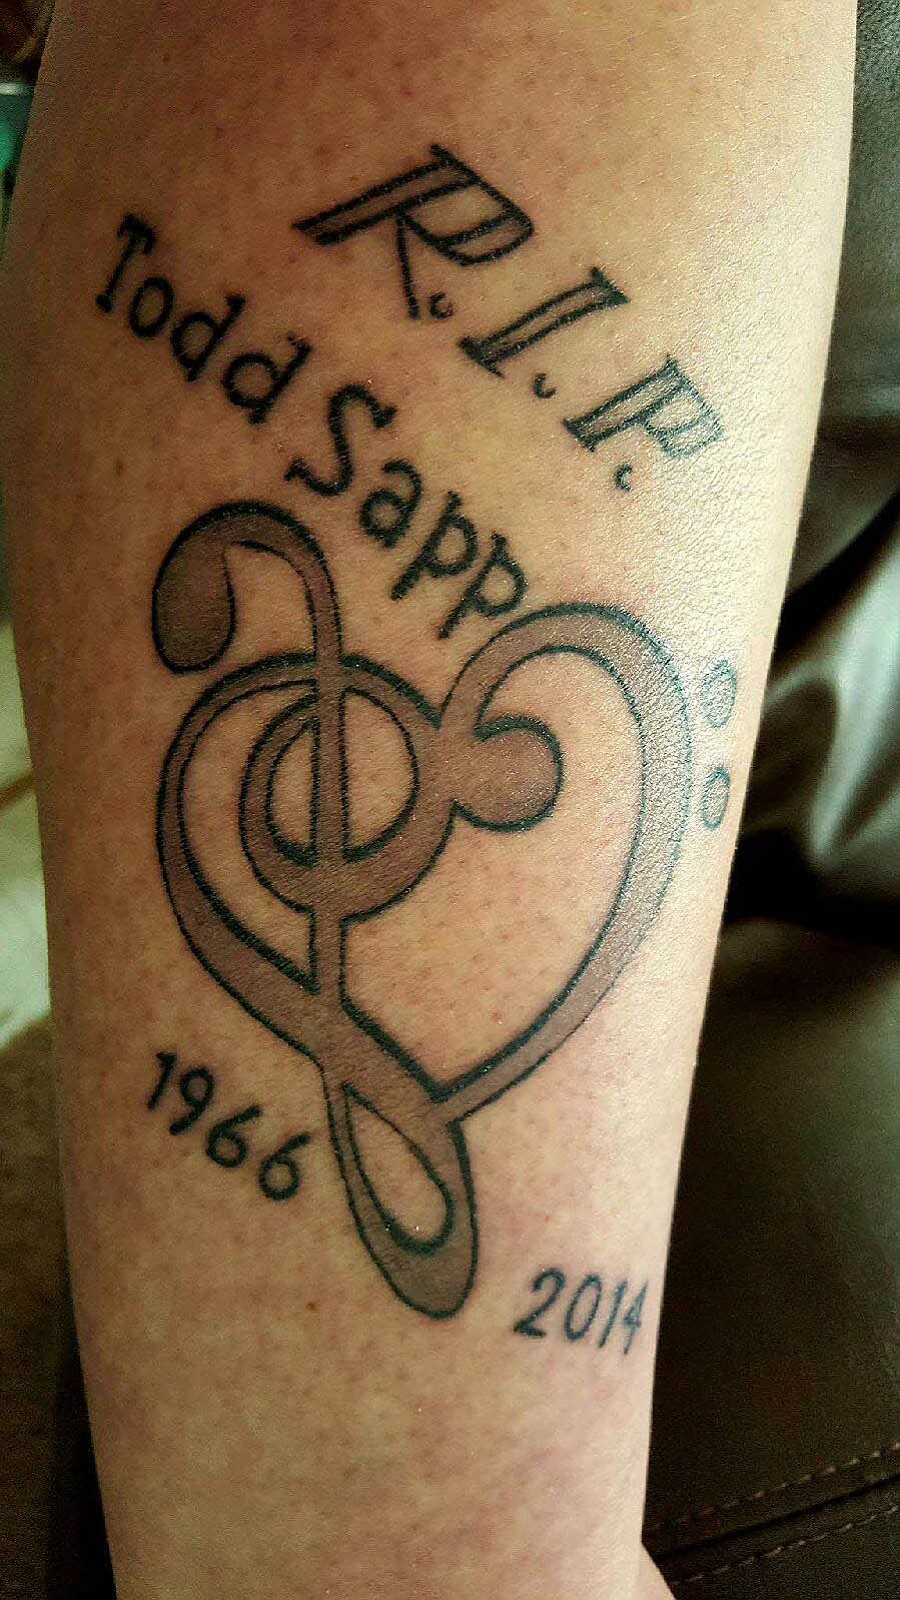 Leah Sapp got a tattoo to memorialize her husband, Todd Sapp.